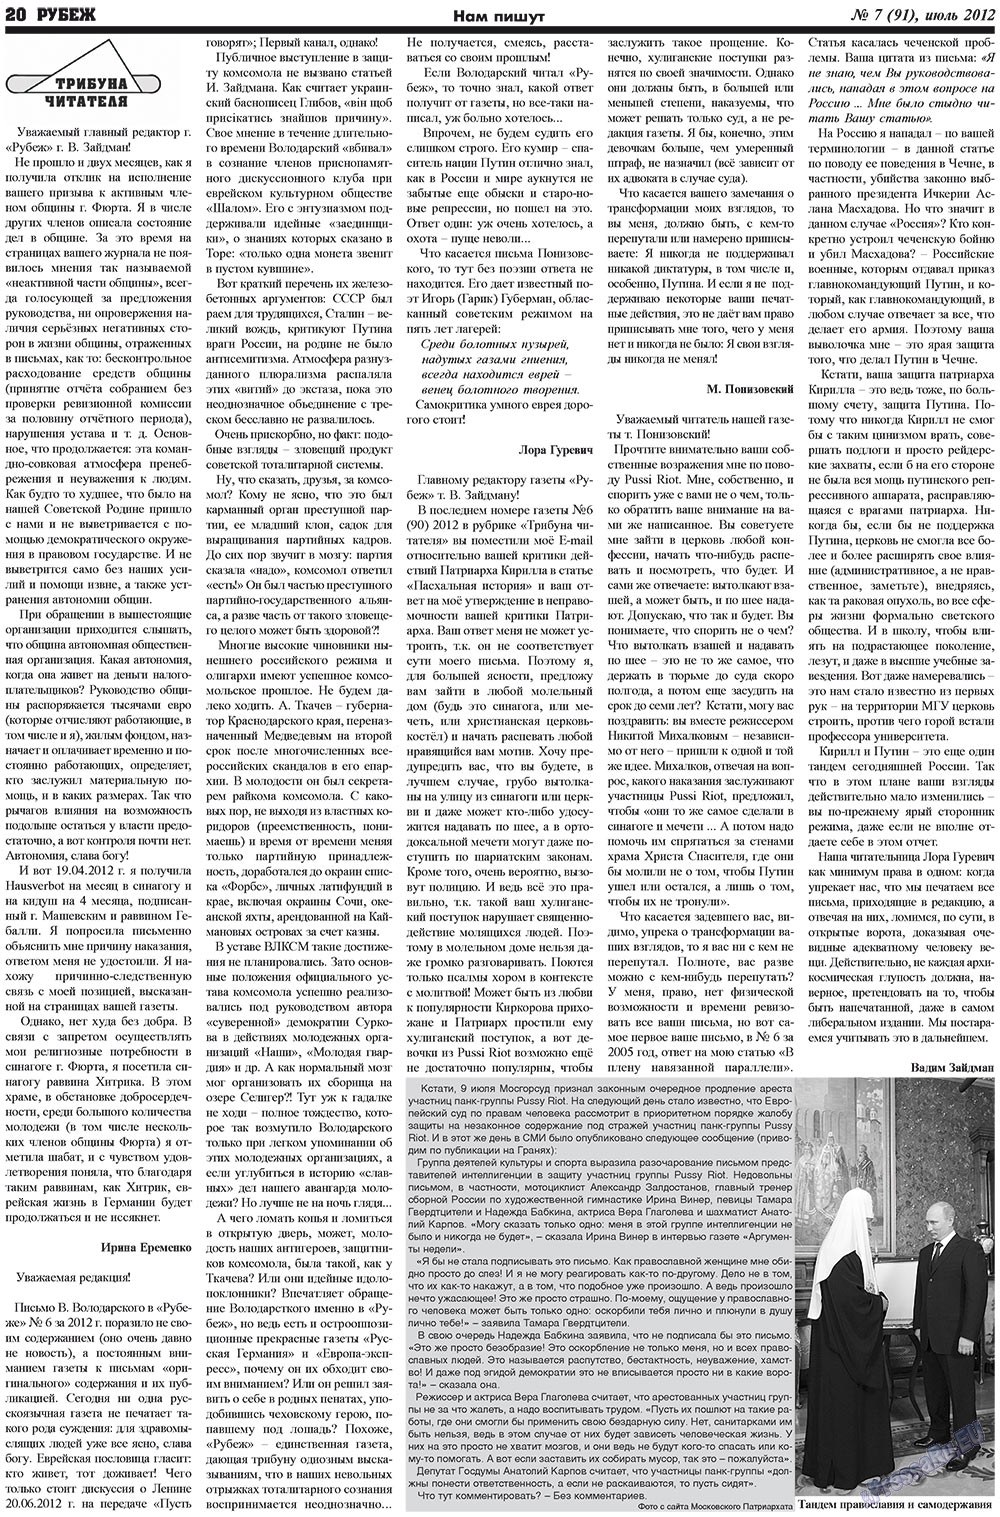 Рубеж, газета. 2012 №7 стр.20